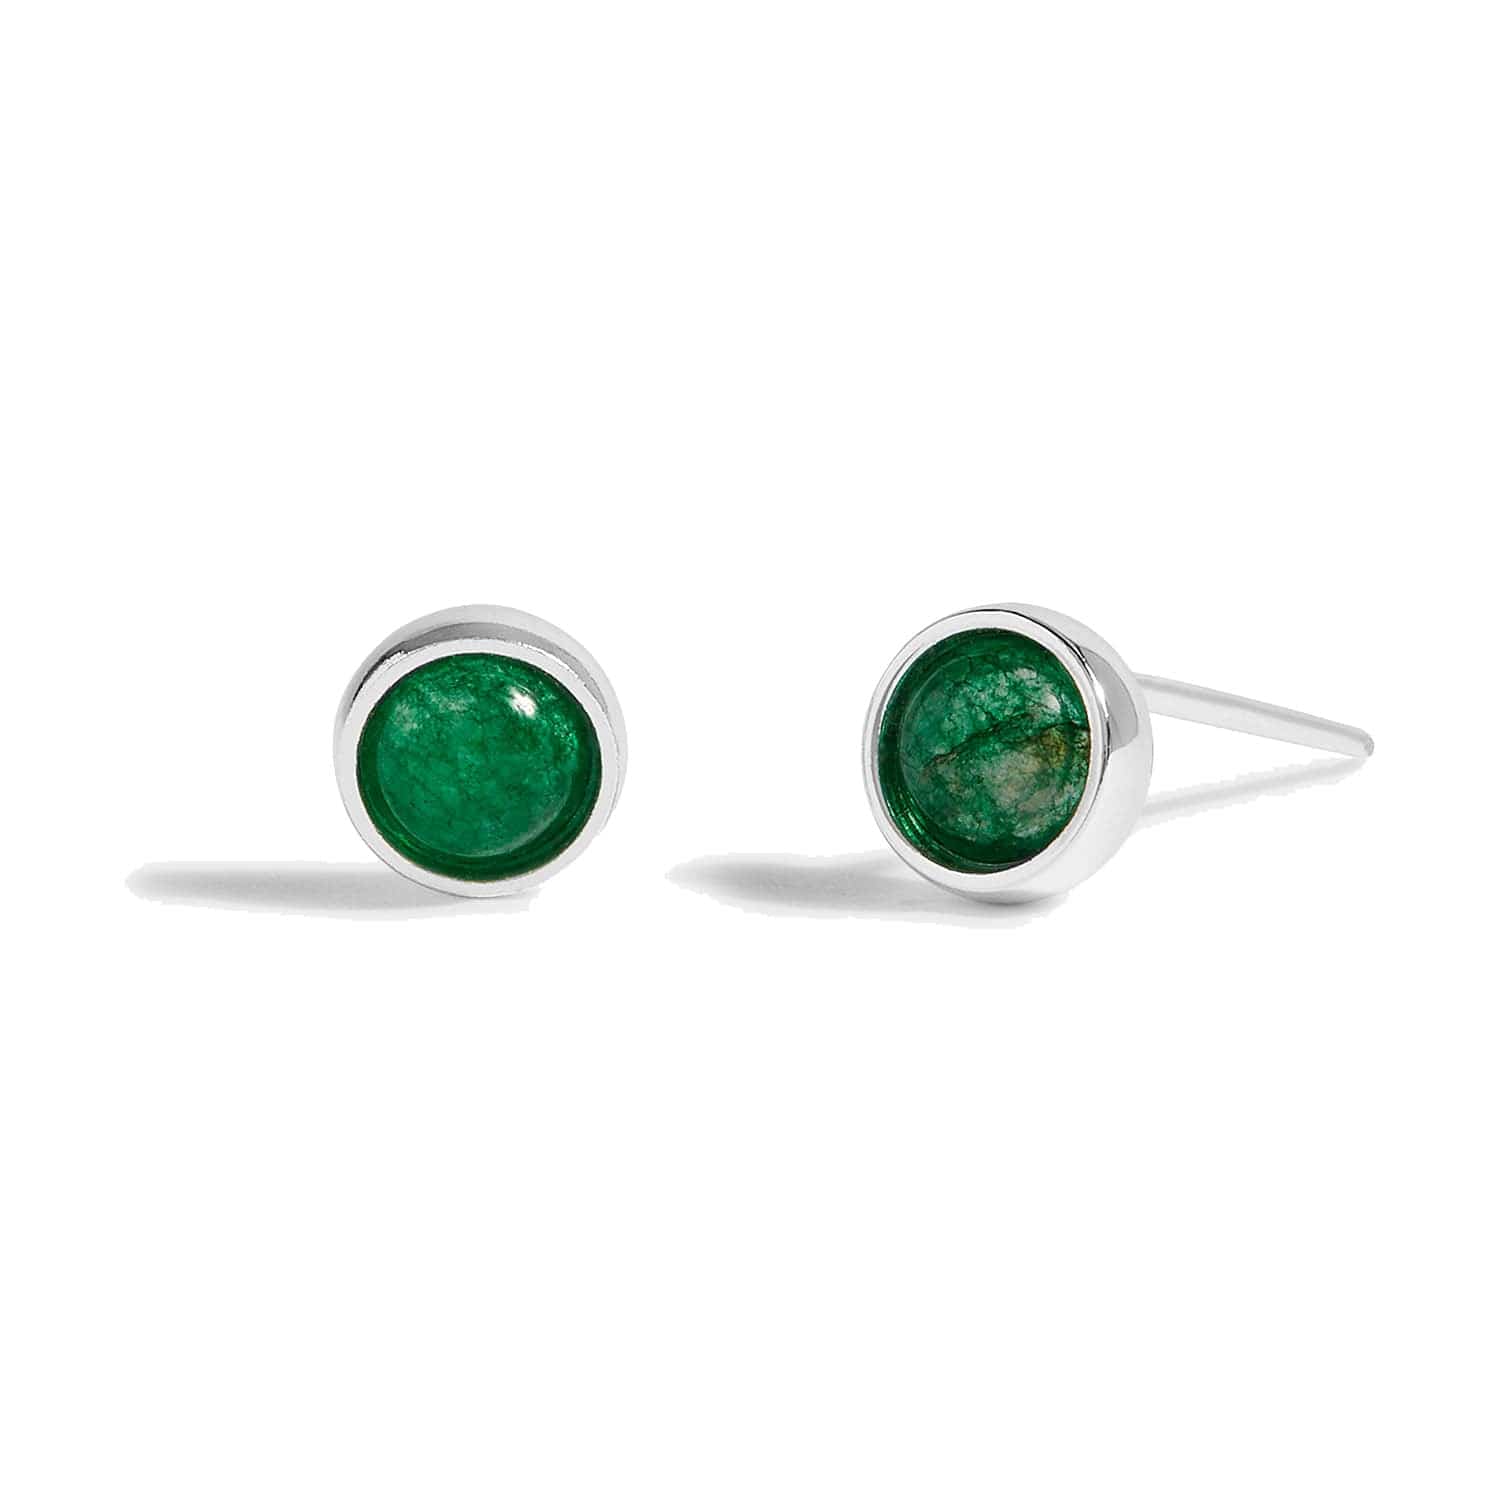 Joma Jewellery Earrings Joma Jewellery Boxed Earrings - Birthstone - May - Green Agate